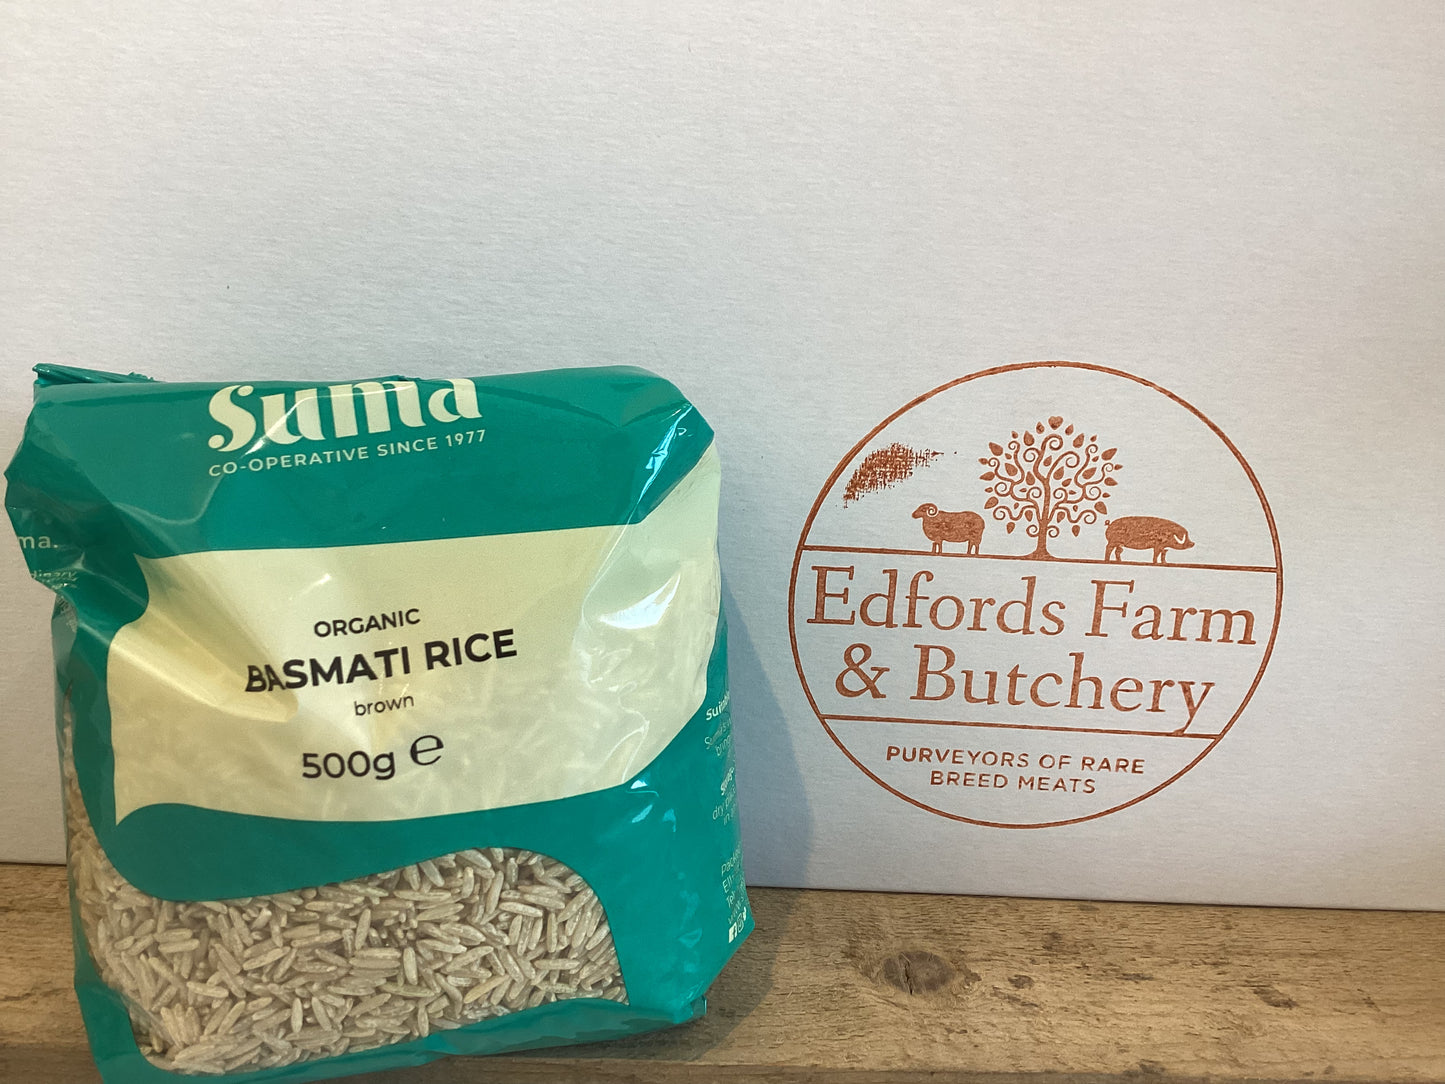 Organic Basmati Rice 500g